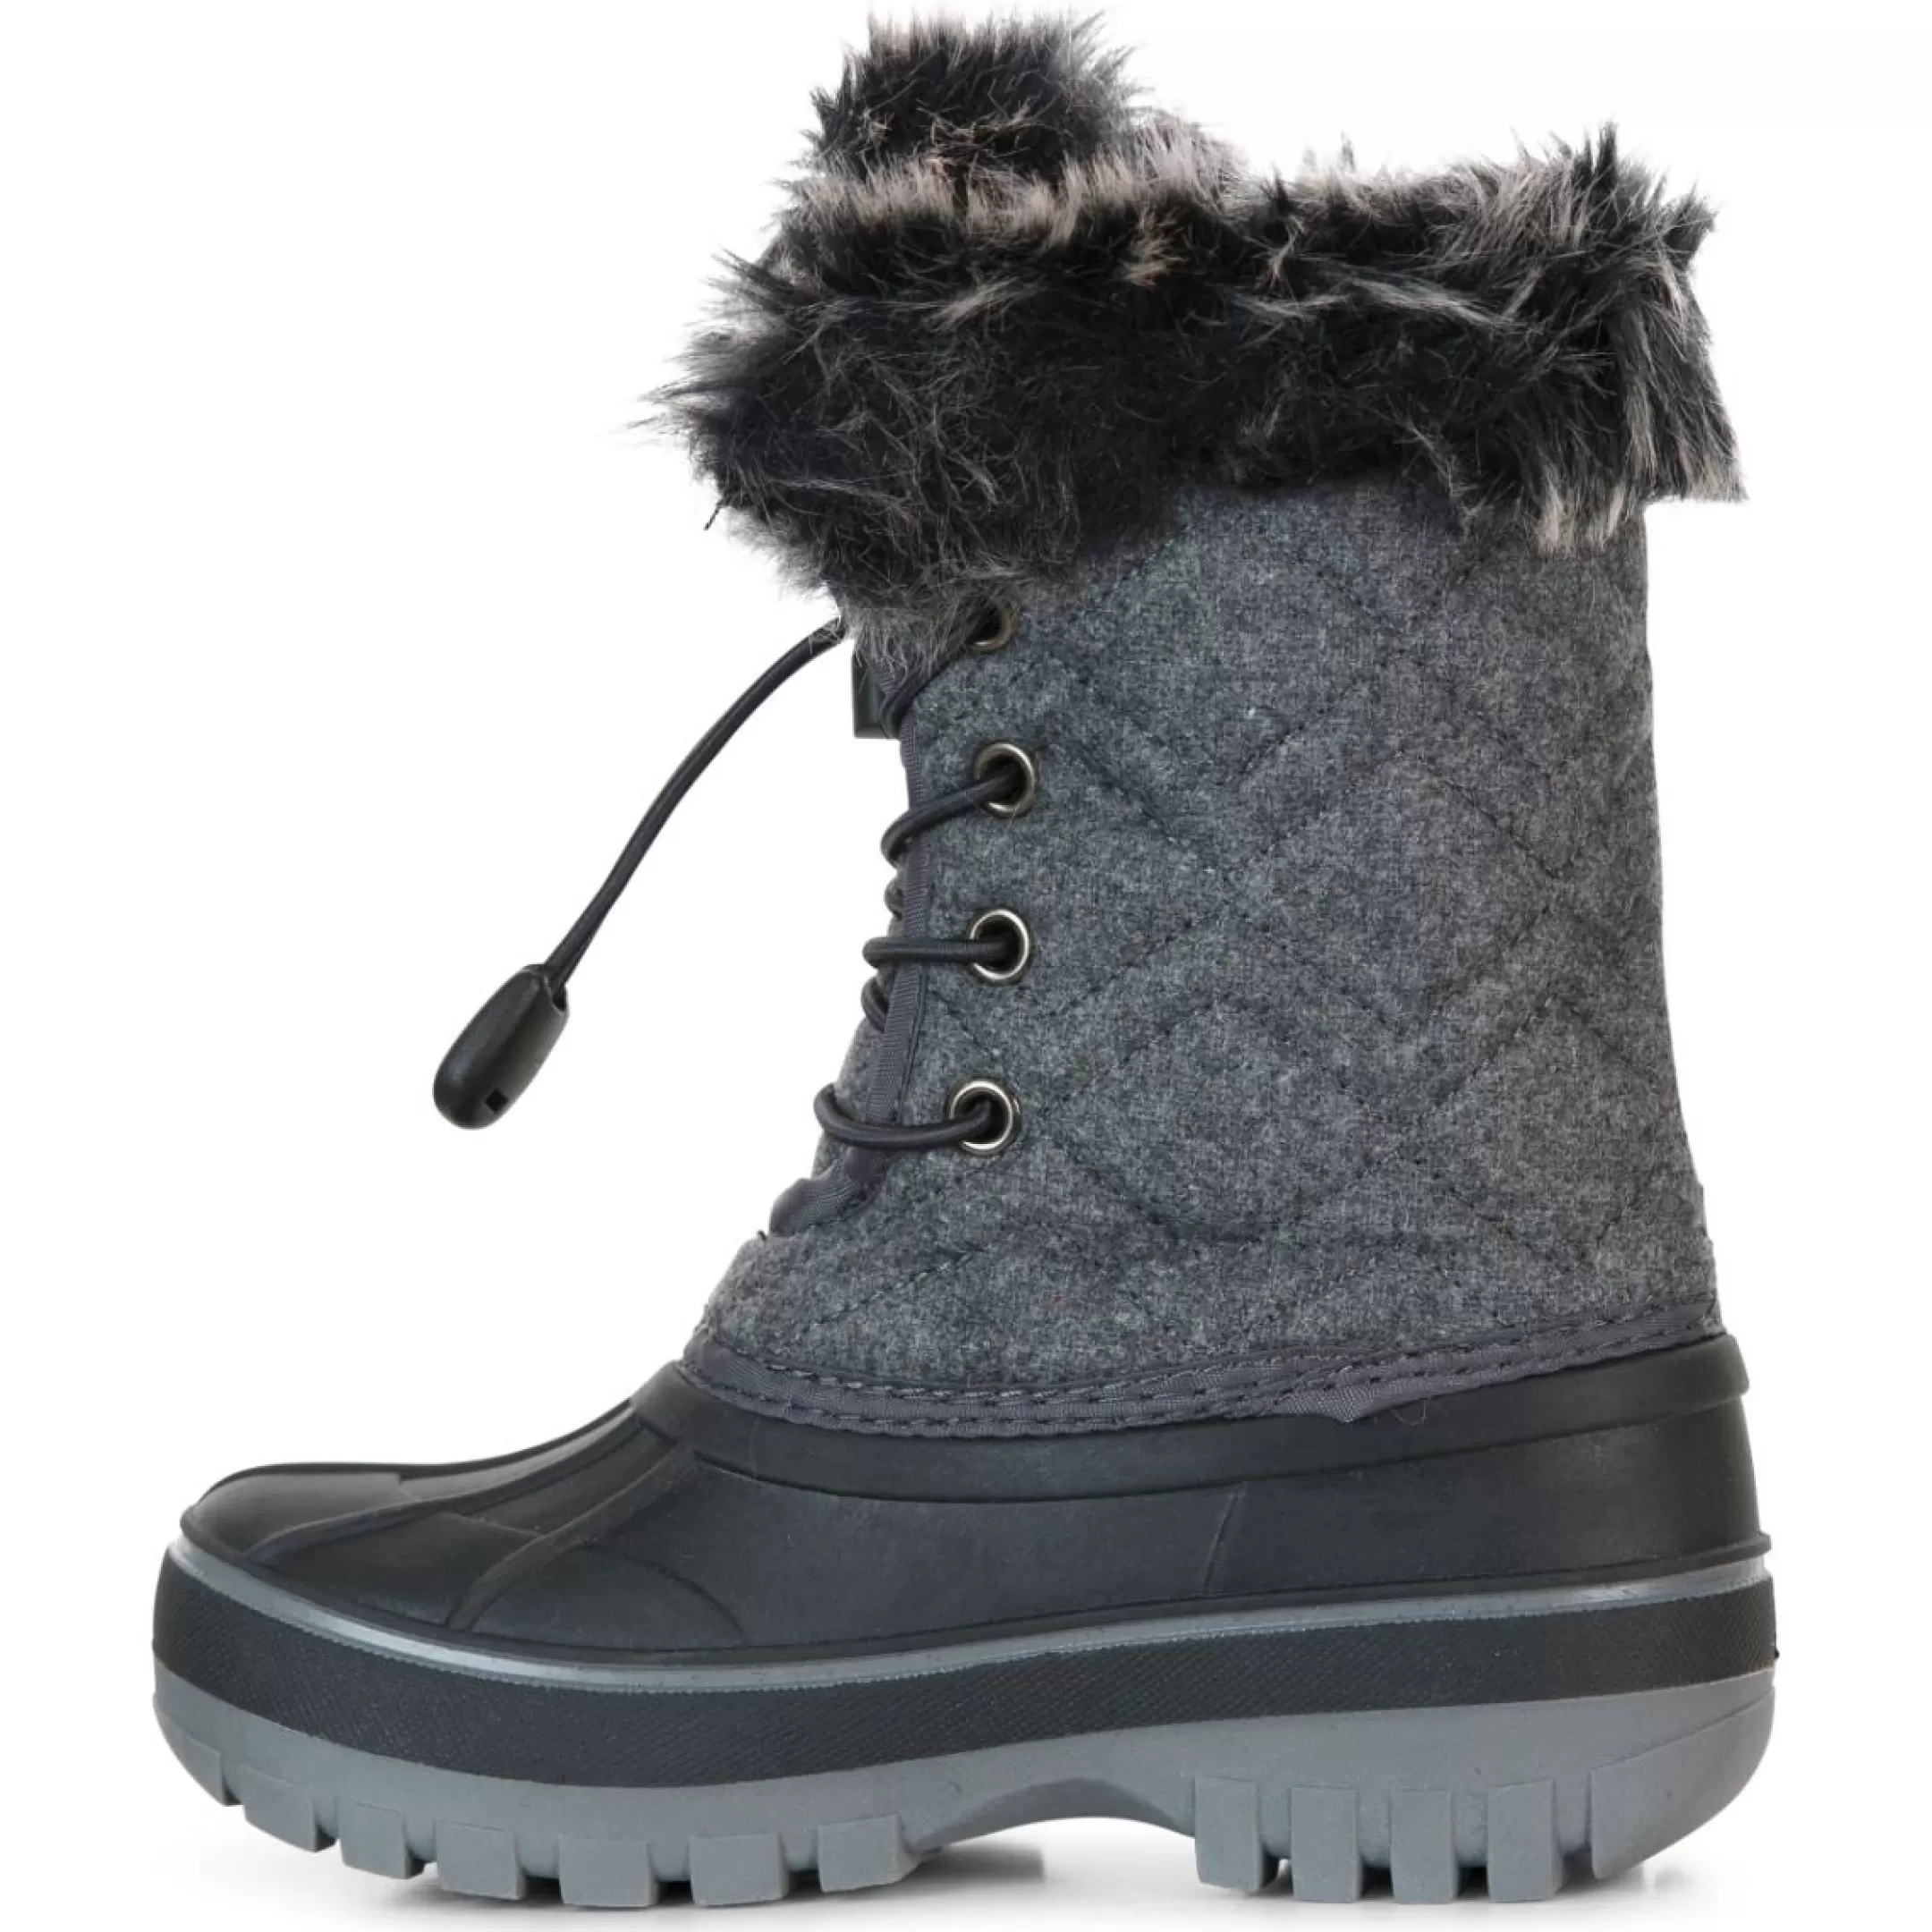 Kids Snow Boots Waterproof Fleece Lined Aine | Trespass Best Sale